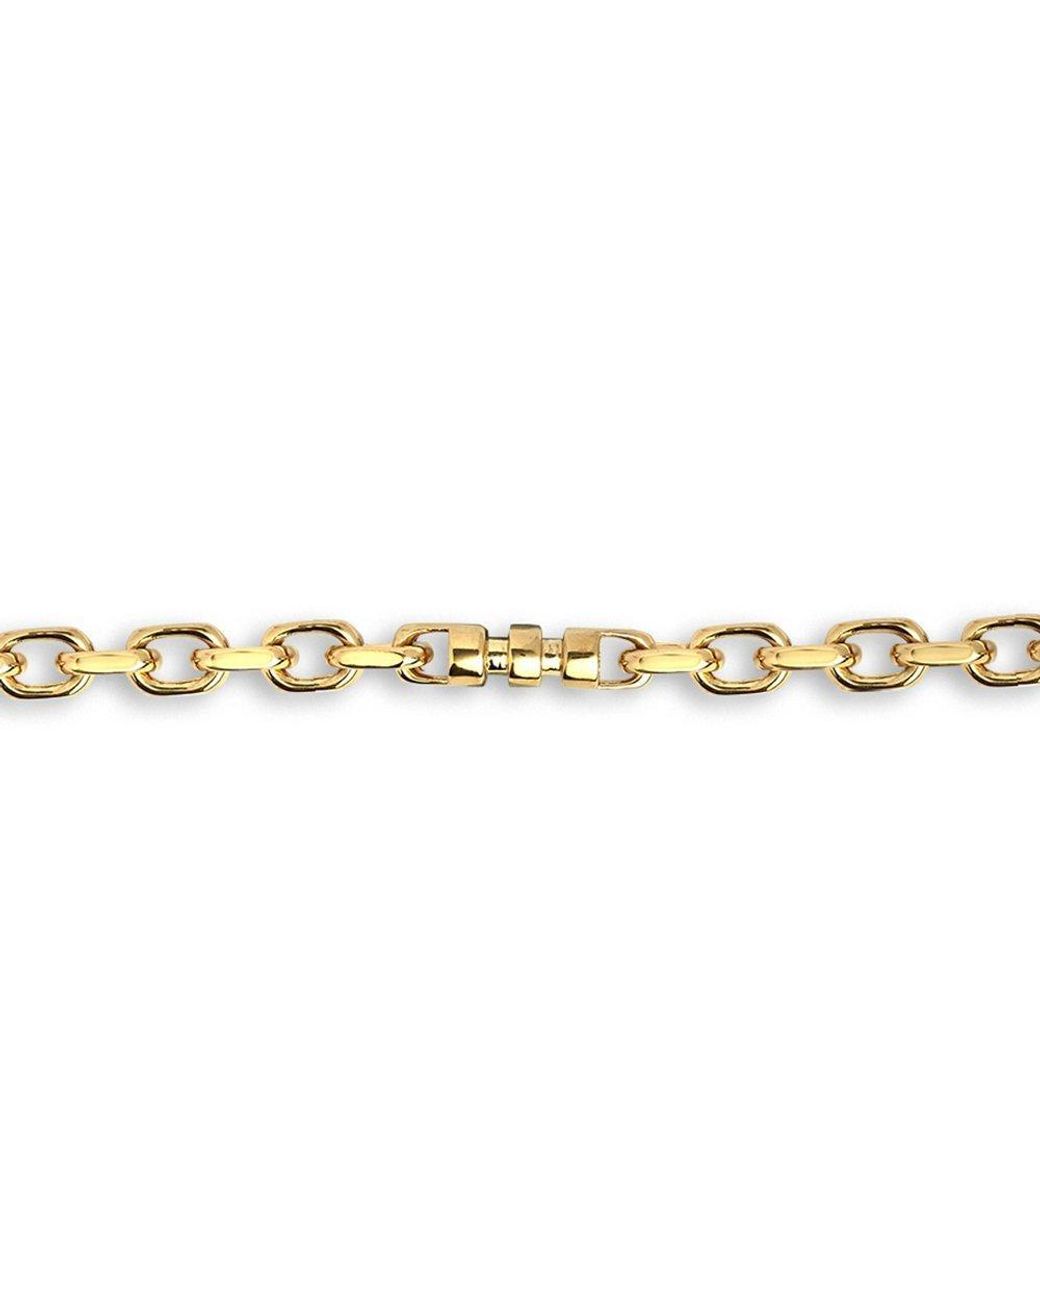 Jewelco London 9ct Gold Spindle Oval 5mm Belcher Bracelet, 7.5